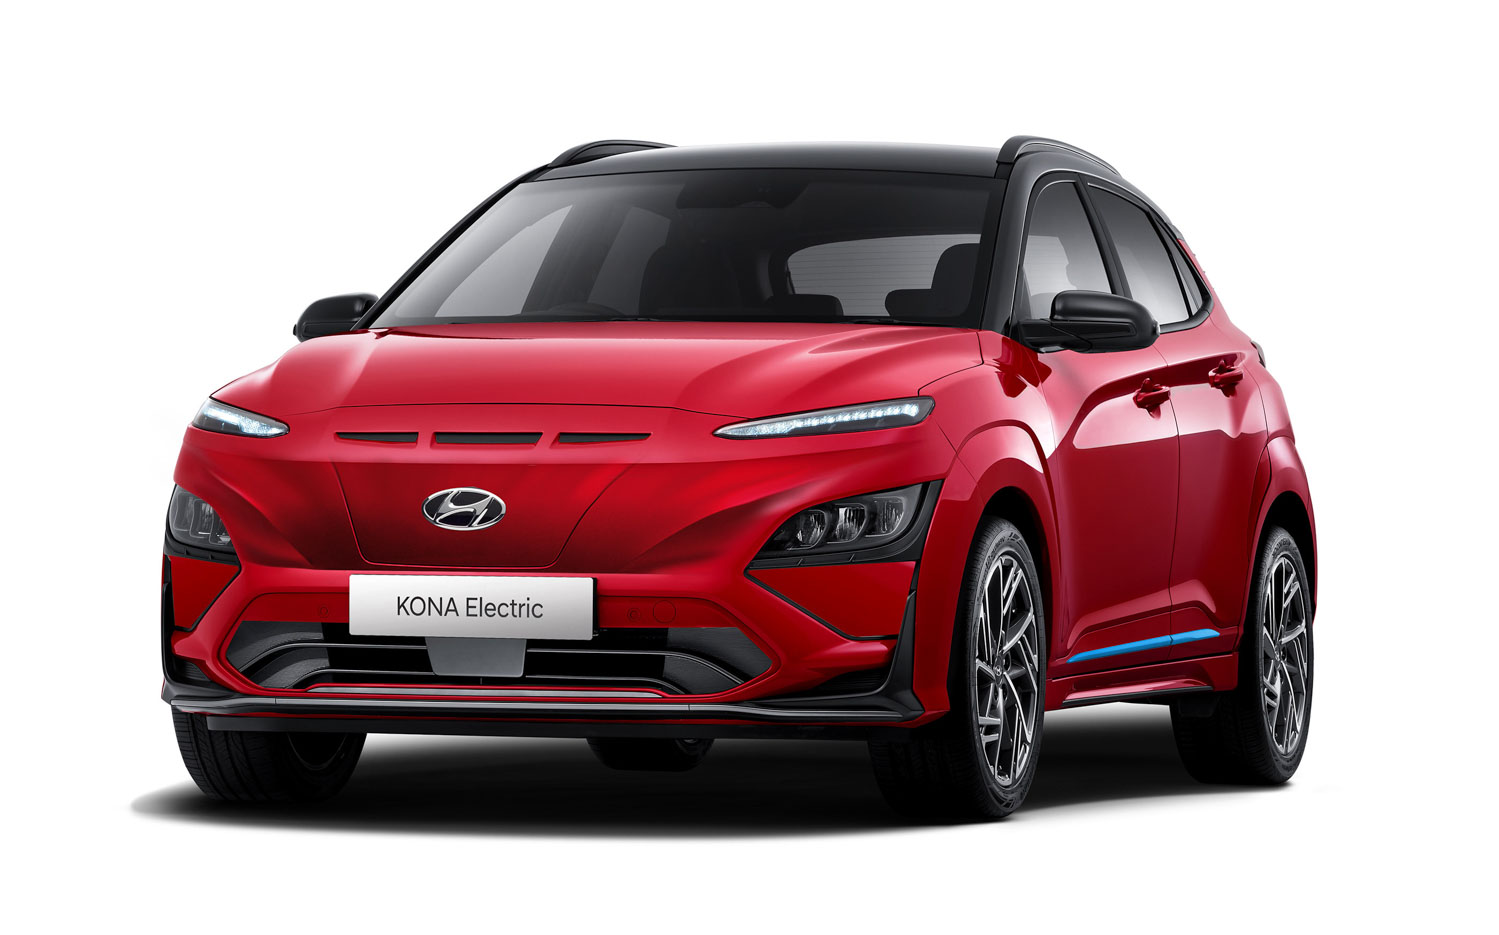 2021 Hyundai Kona Electric facelift unveiled